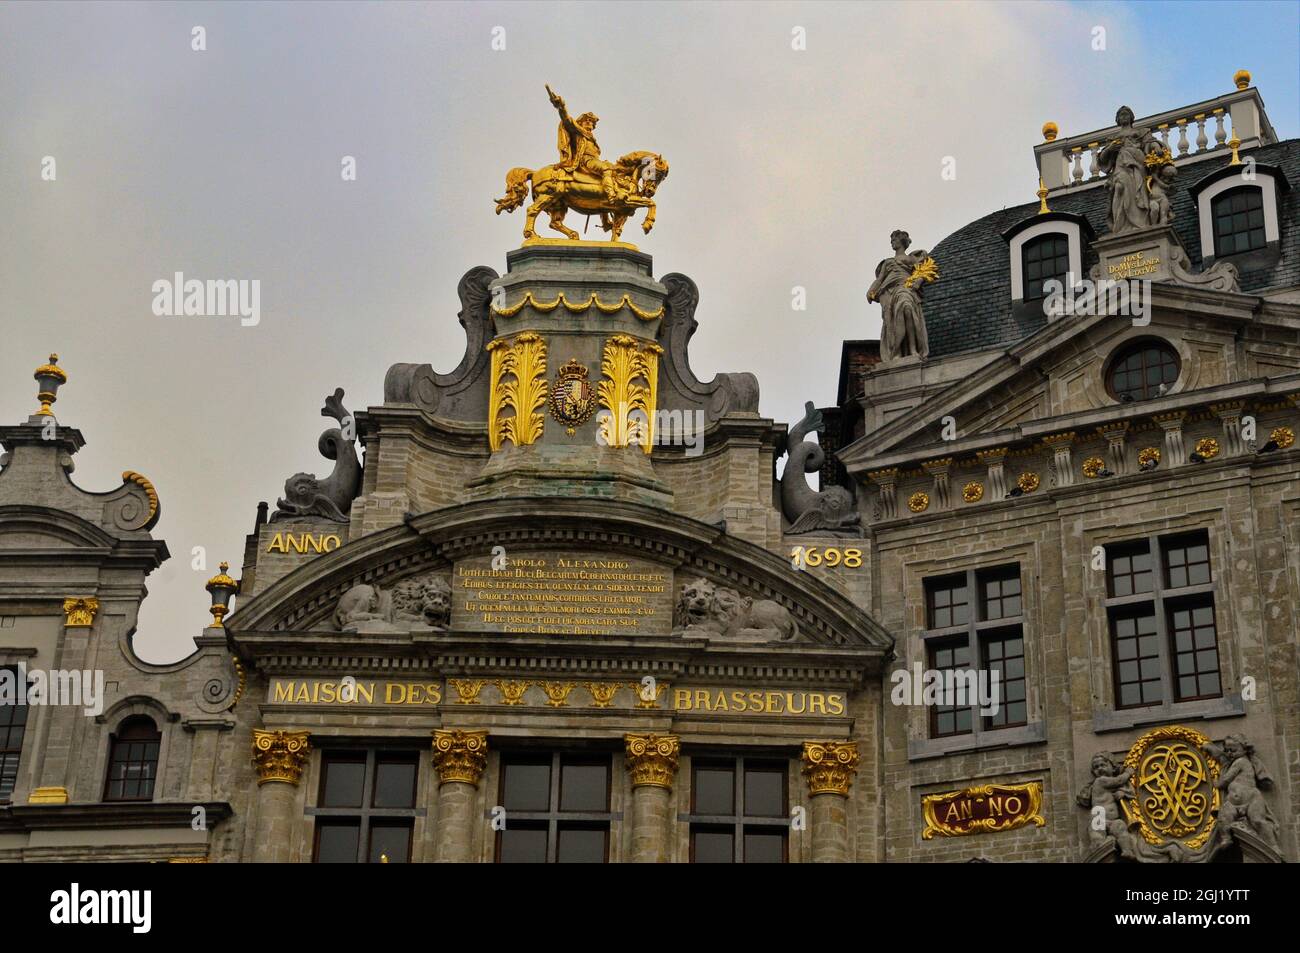 Maison des brasseurs building in Brussells, Belgium. Stock Photo